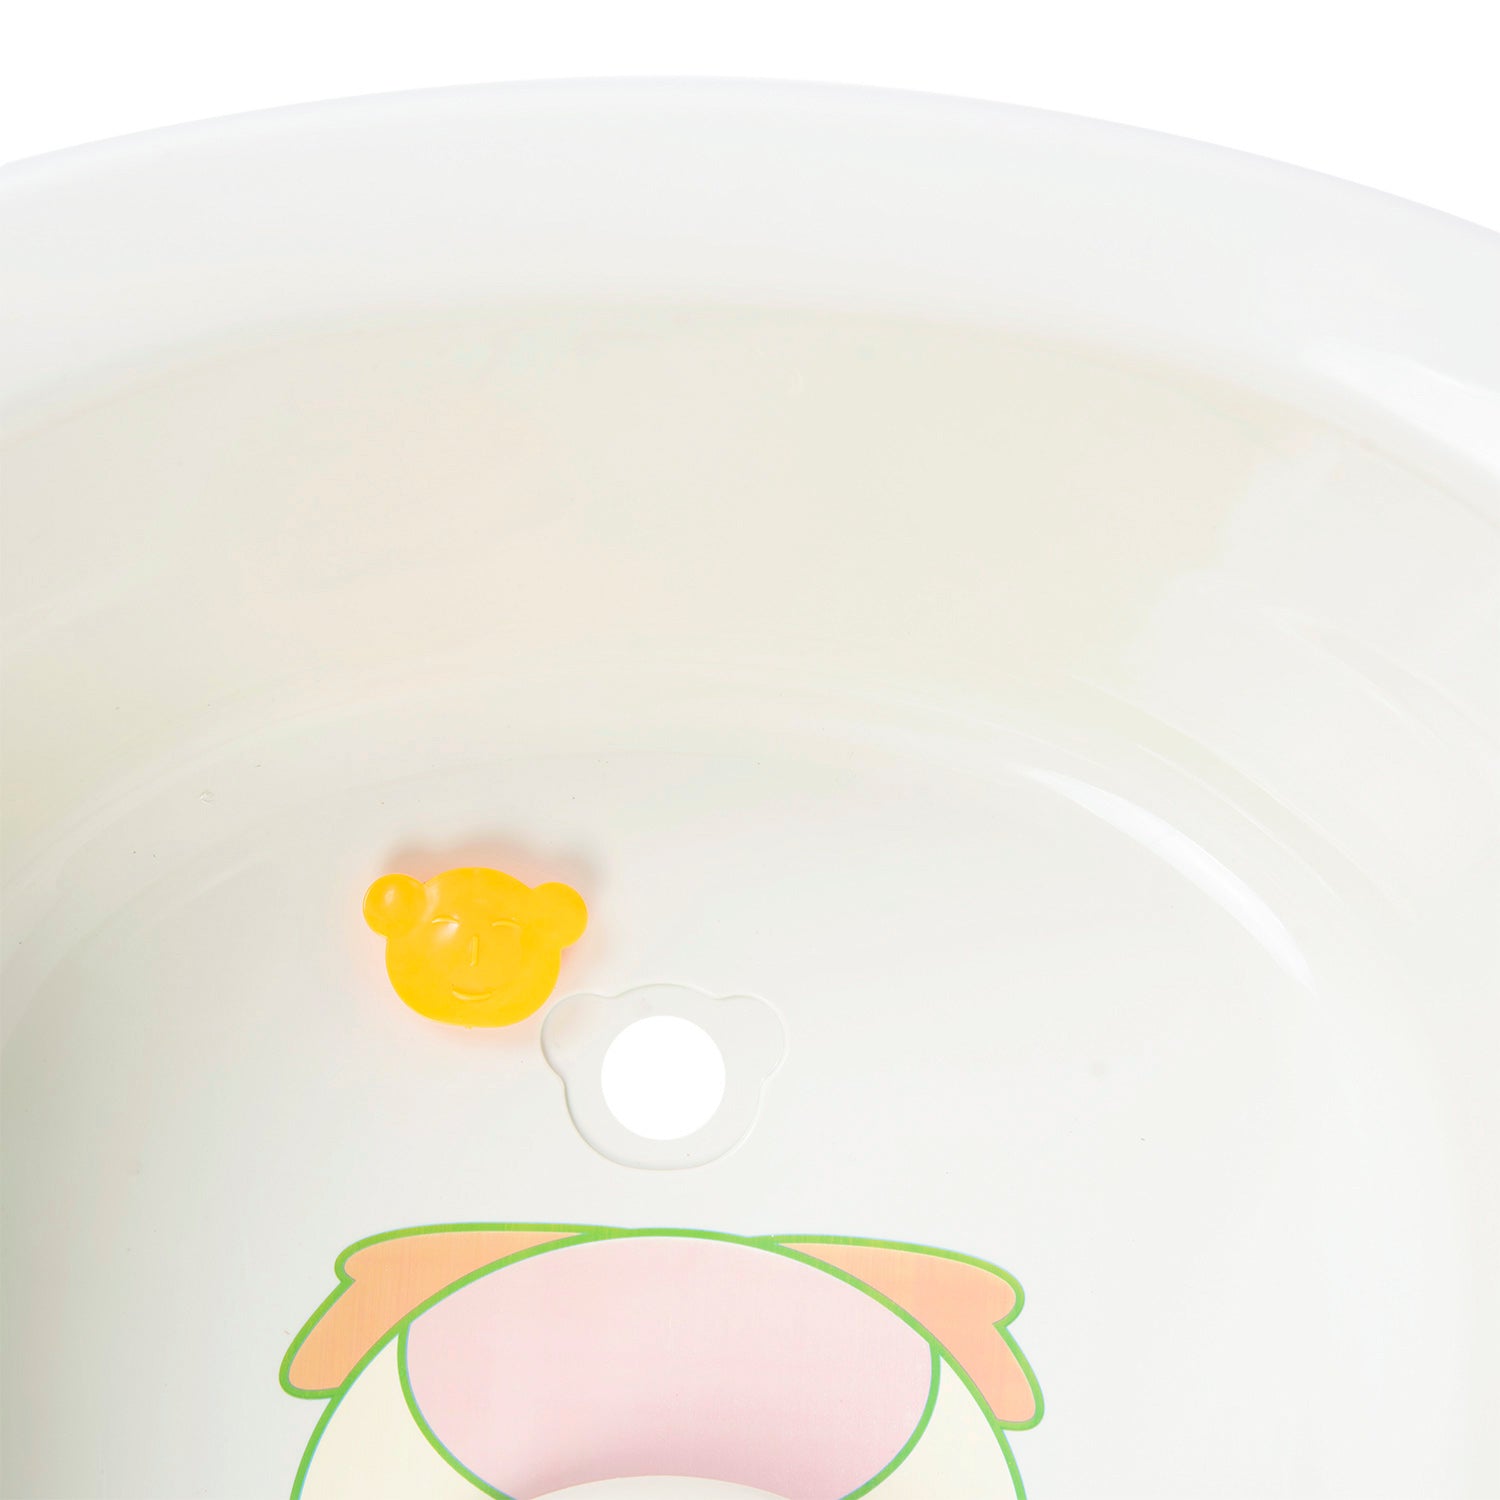 Baby Moo Bath Tub With Bather And Drain Plug Animal Face Cream